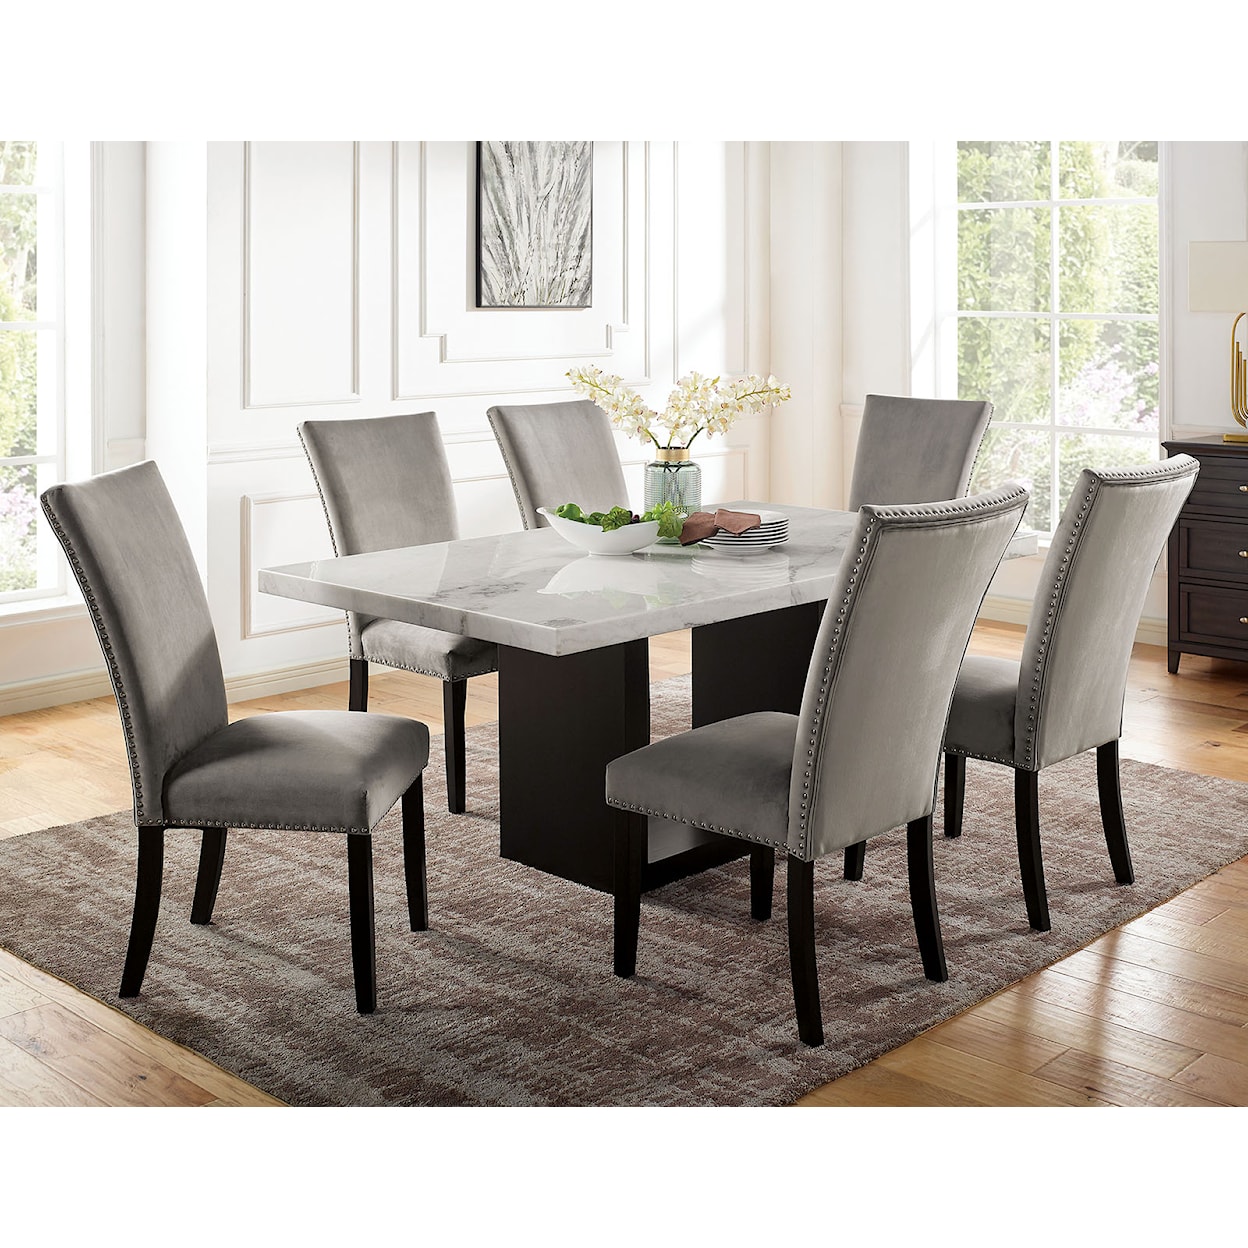 Furniture of America Kian 7-Piece Dining Table Set